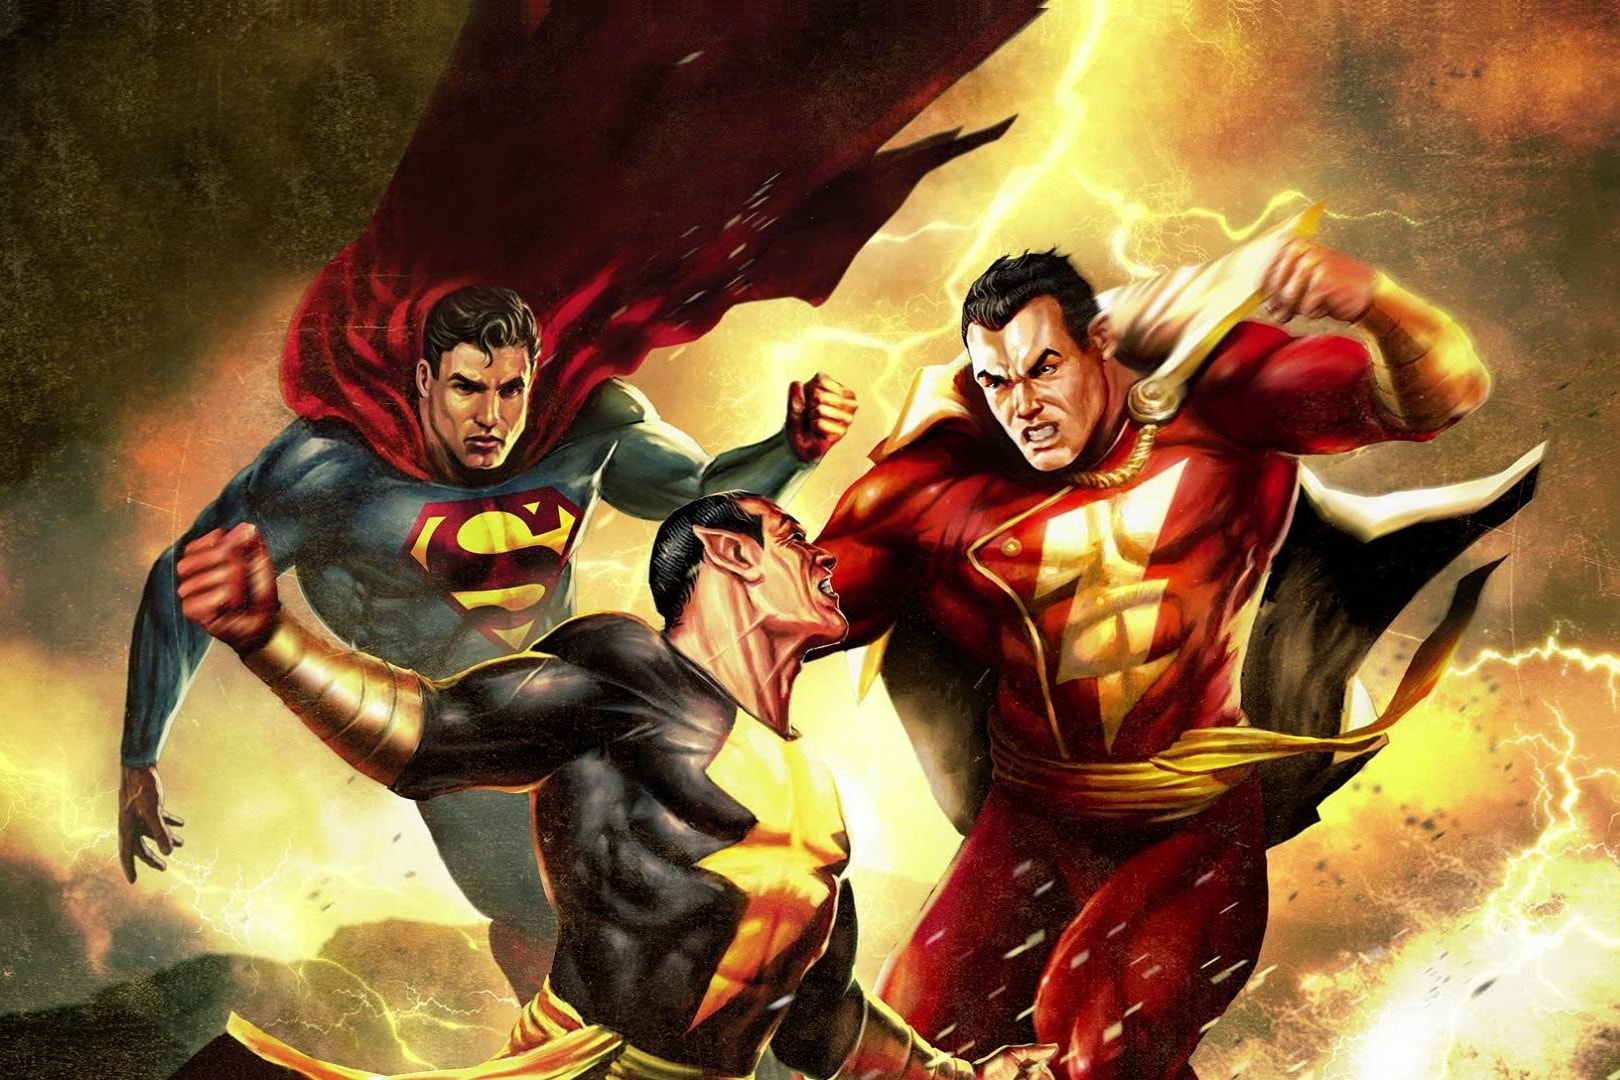 Man of Steel 2 Trends As DC Fans Choose Between Superman or The Batman  Sequel